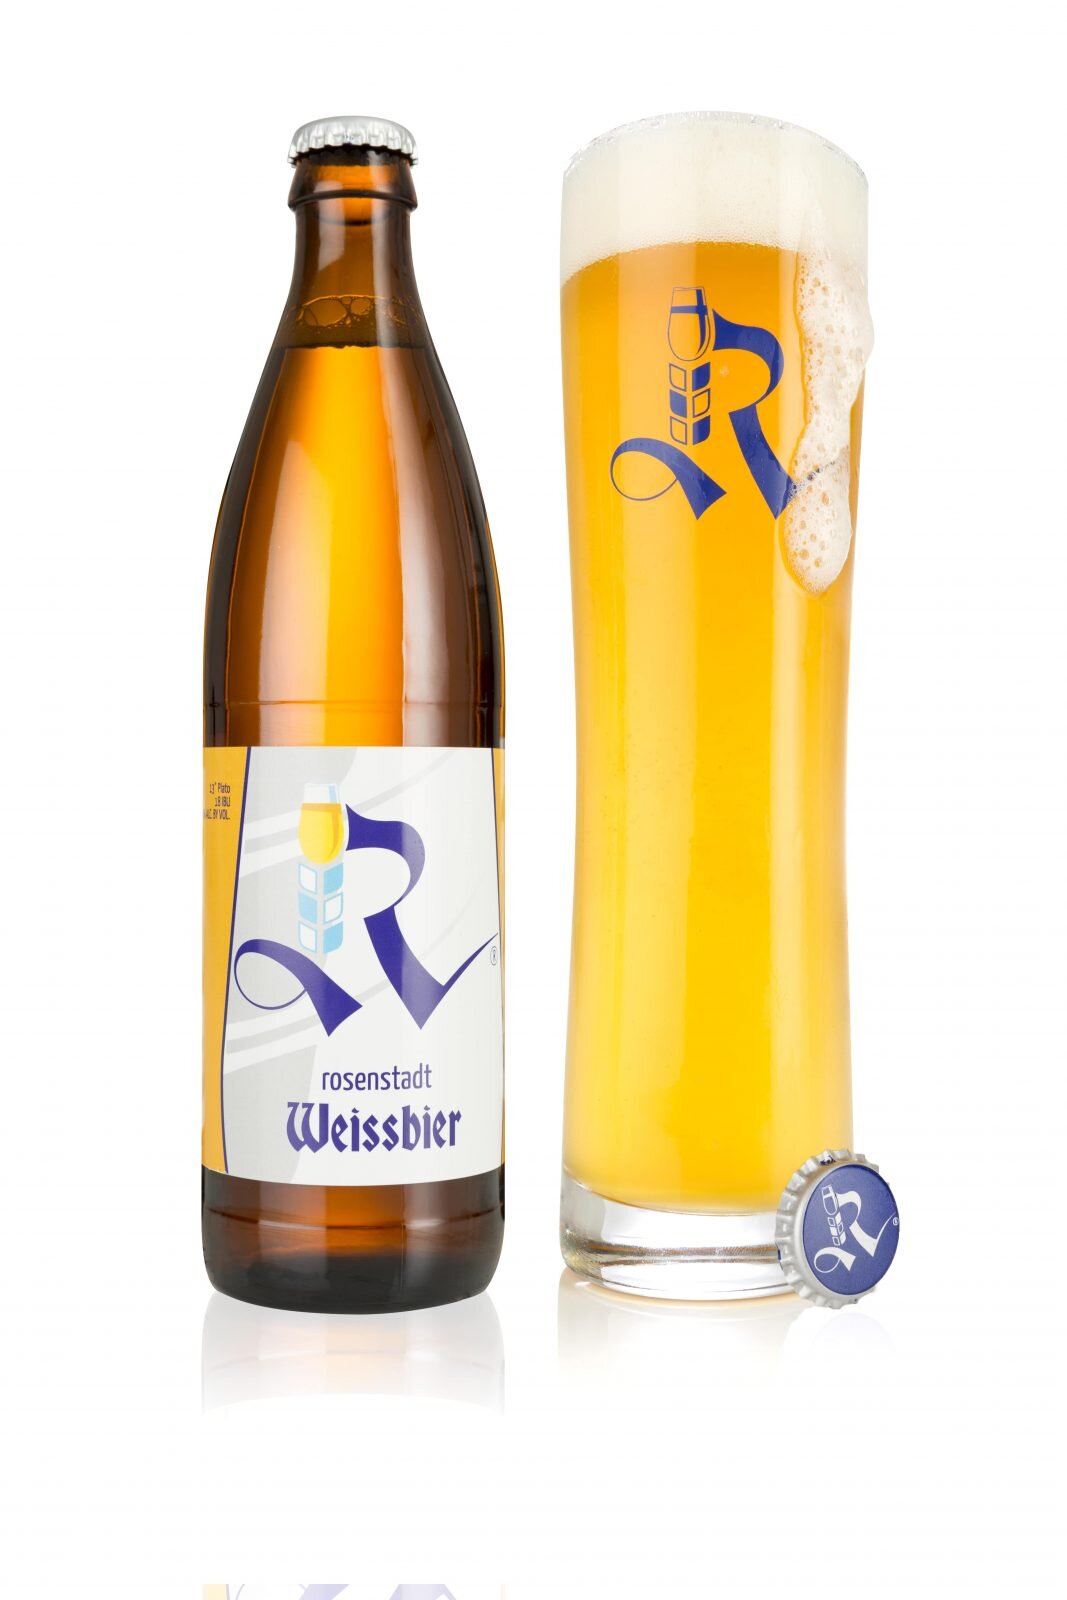 Rosenstadt Weissbier bottle and glass